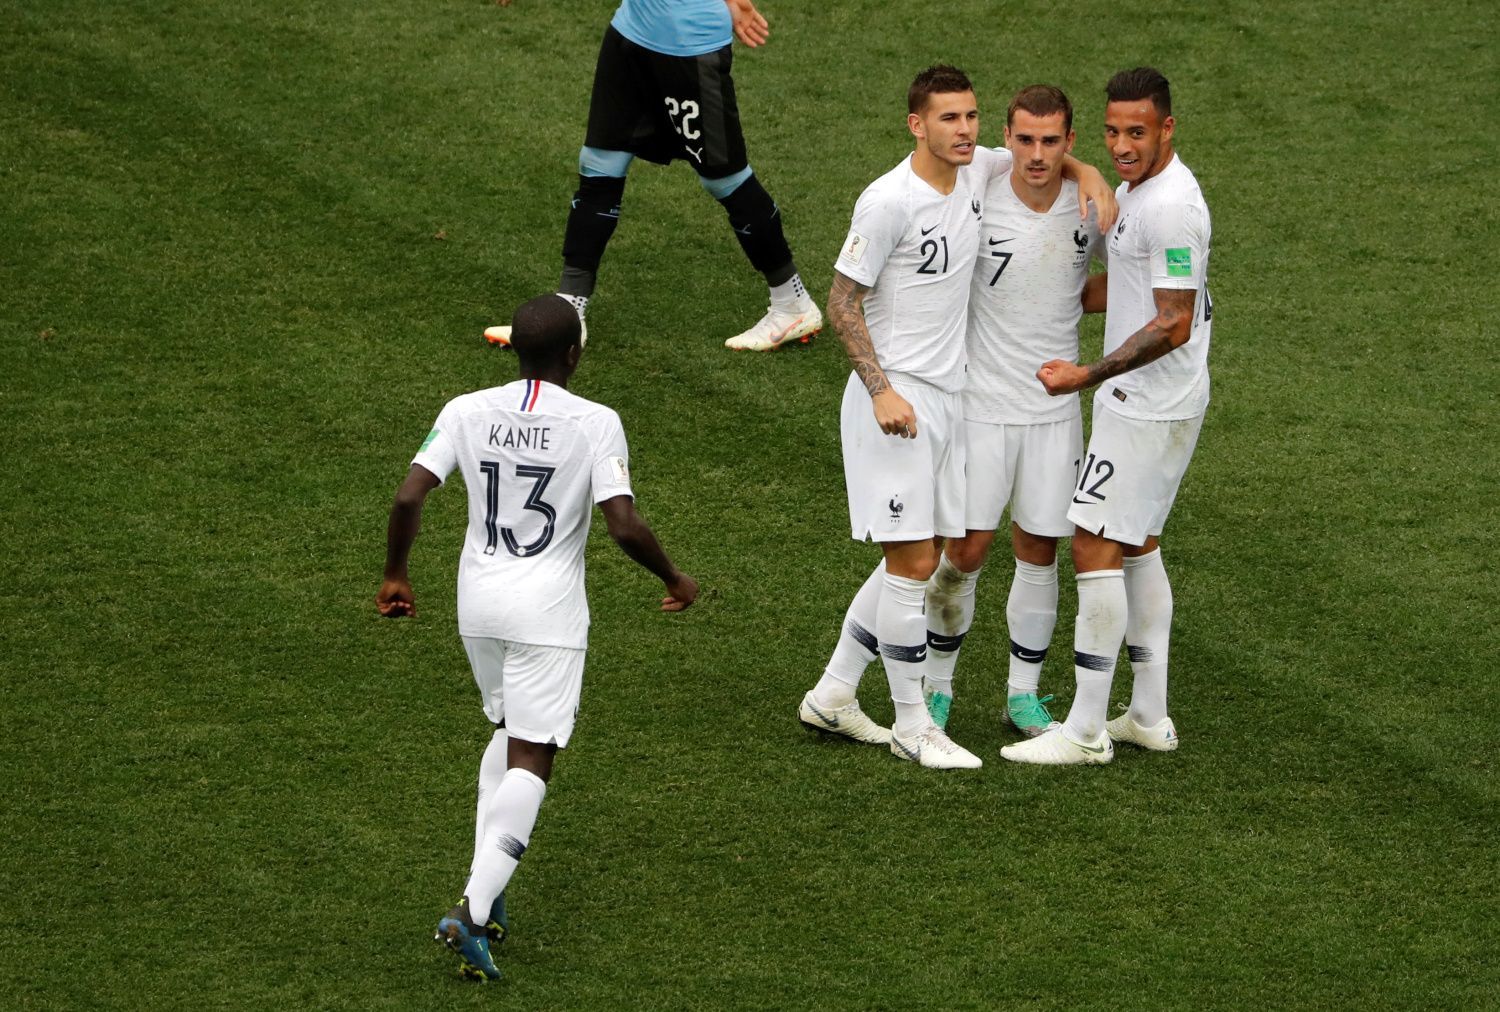 Antoine Griezmann slaví gól v zápase Uruguay -- Francie na MS 2018